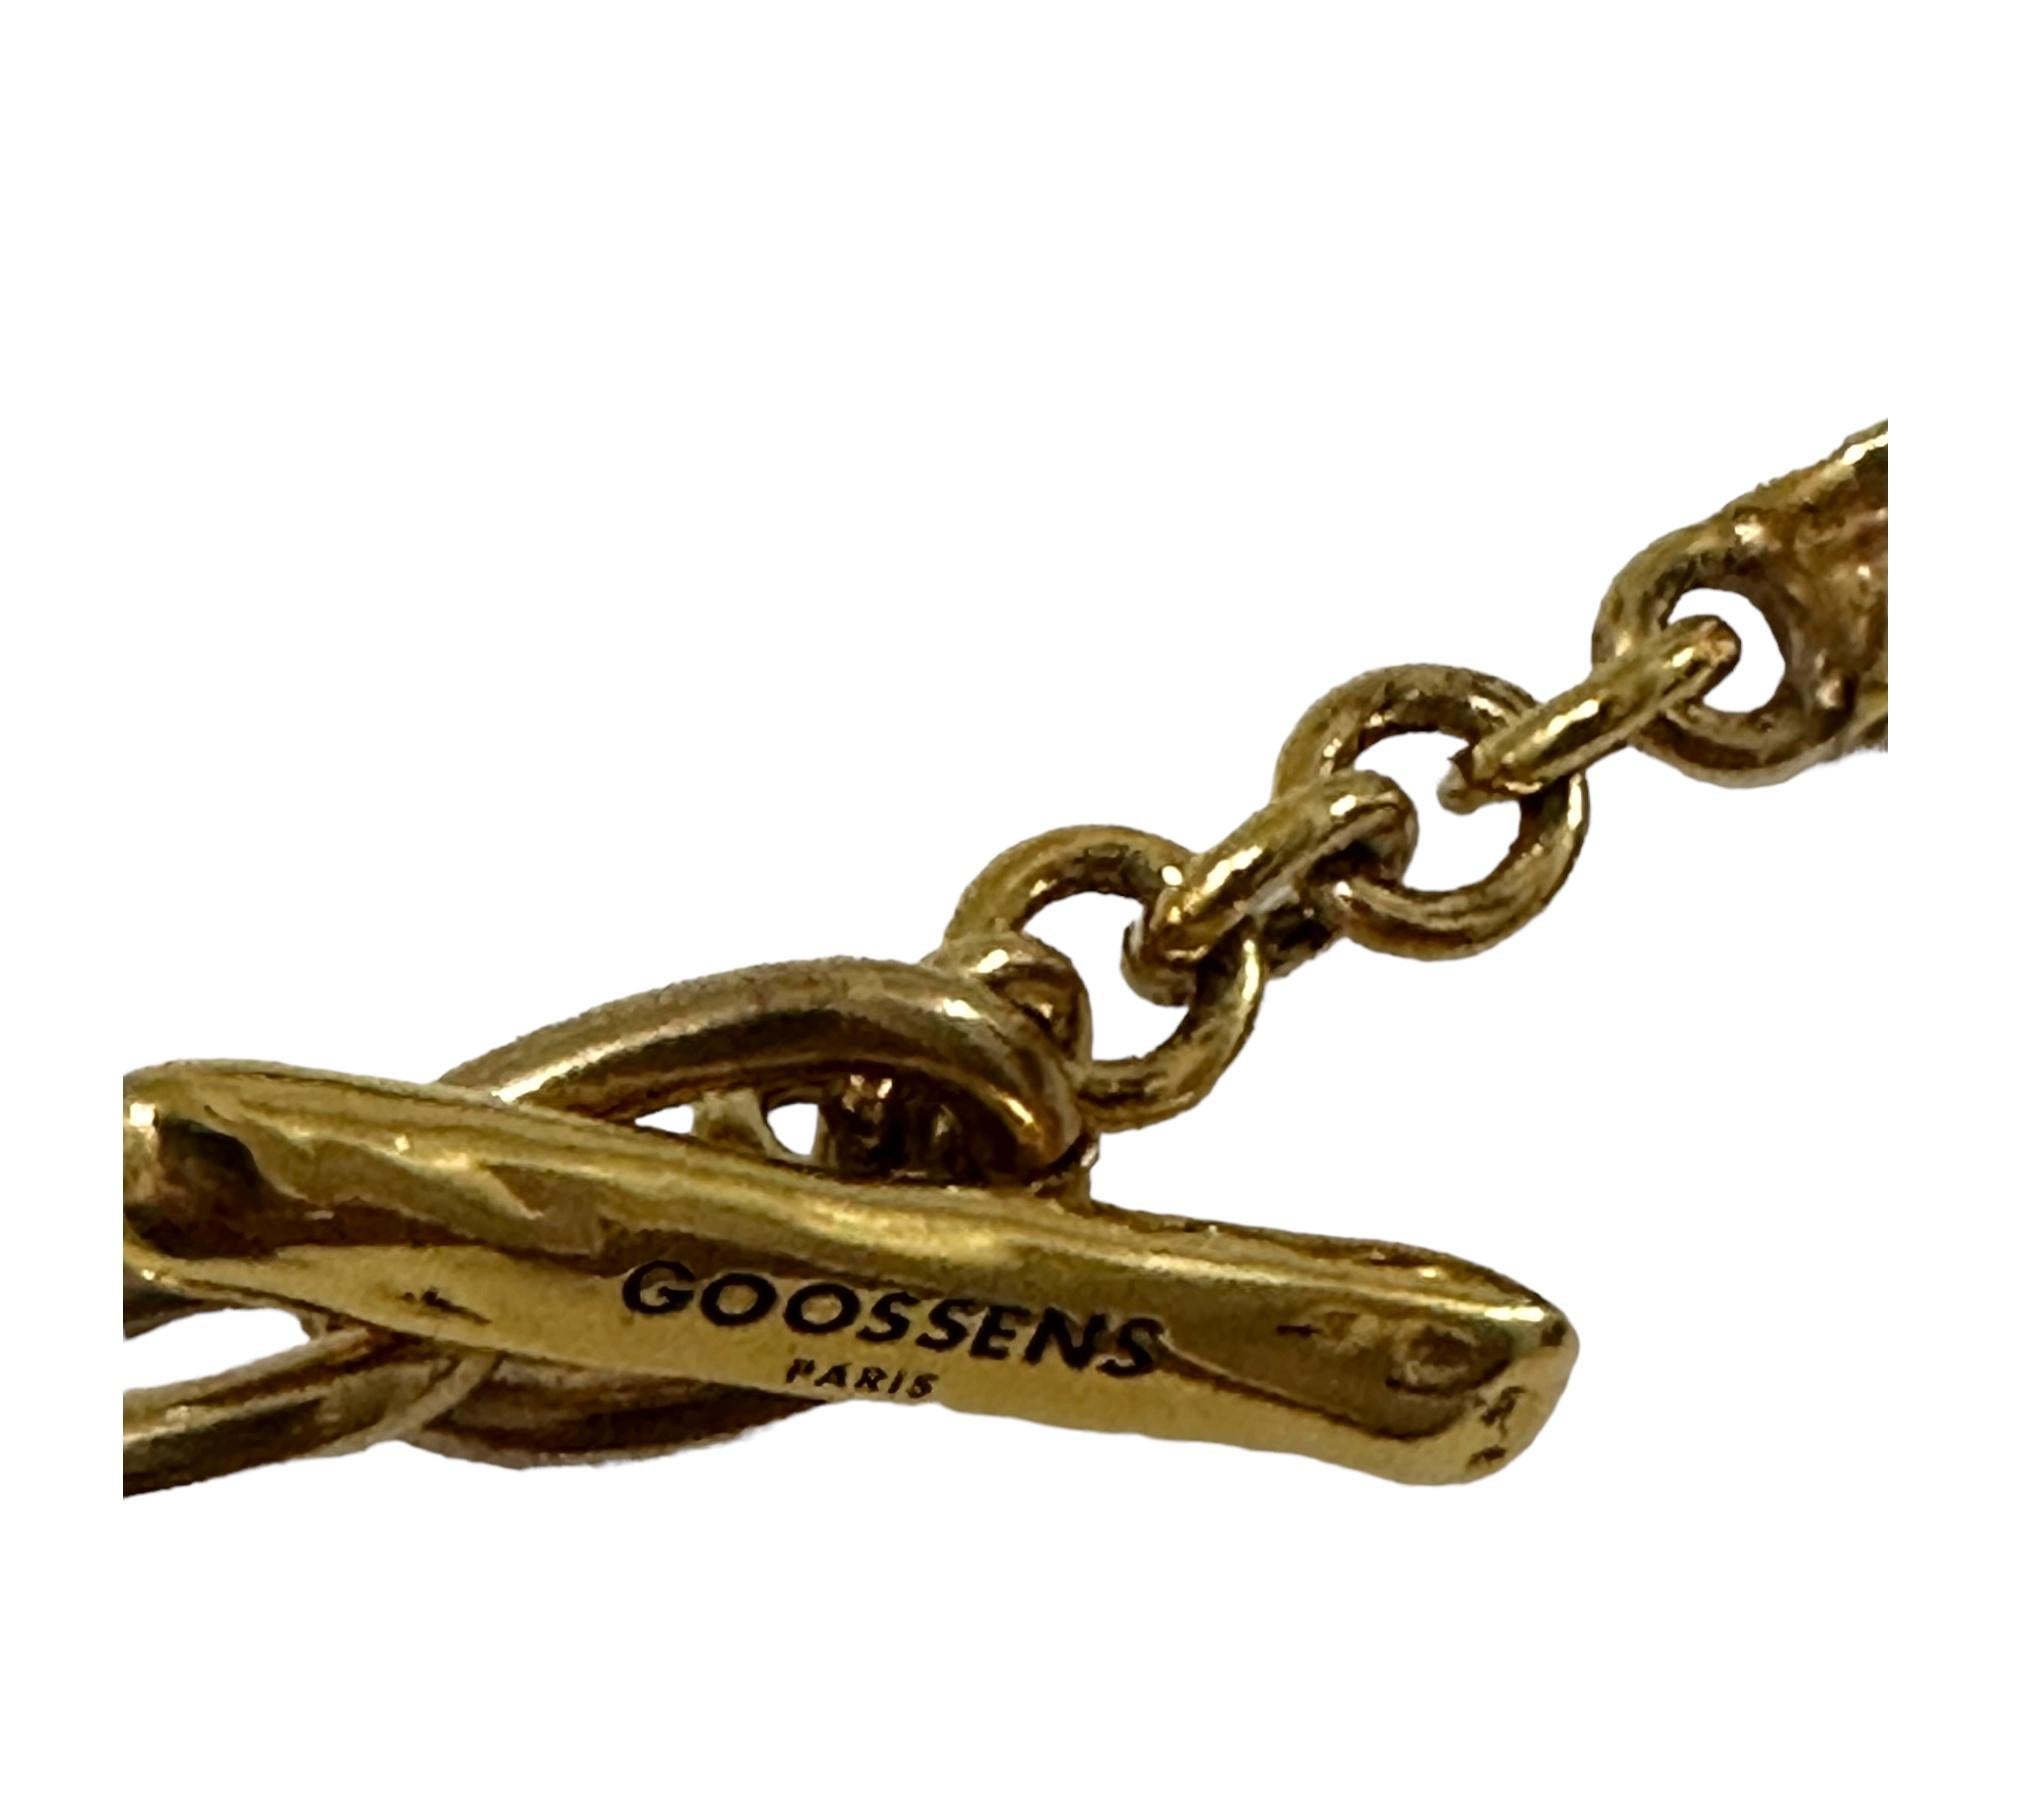 Goossens -Paris Lutece Link Bracelet  In New Condition For Sale In Virginia Beach, VA